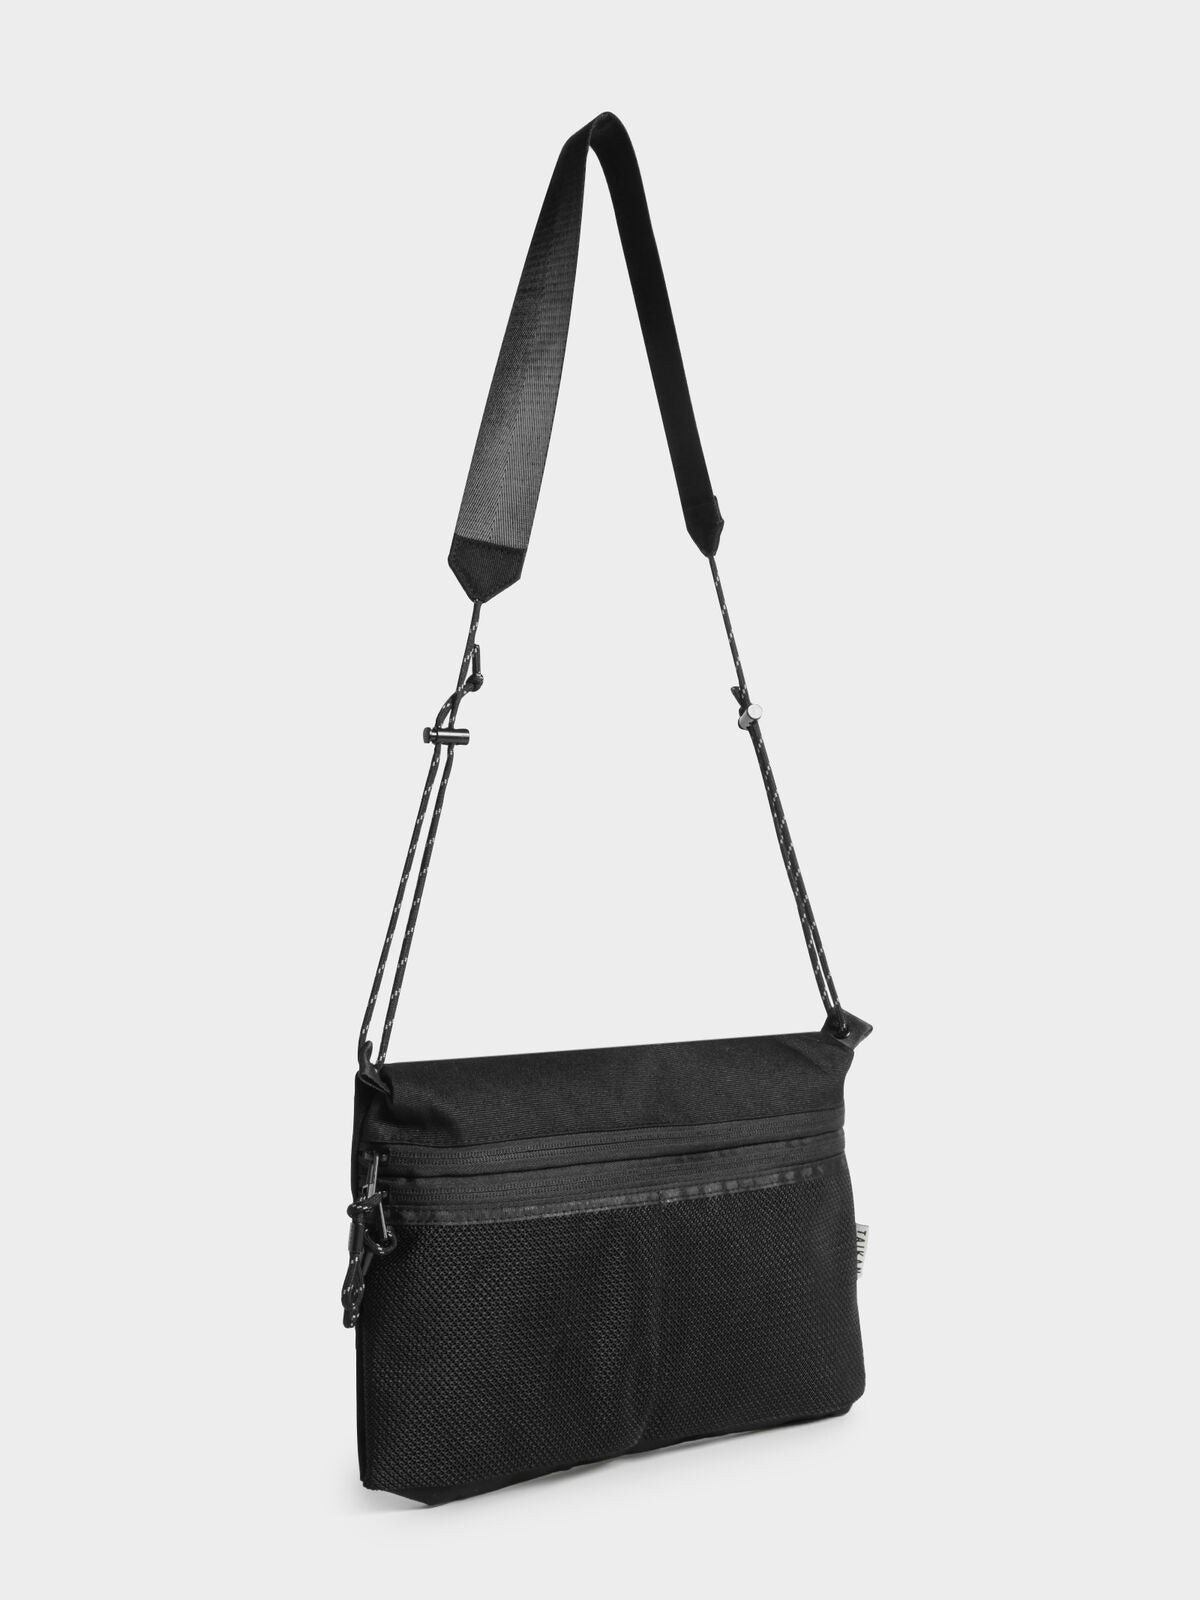 Sacoche Large Crossbody Bag in Black